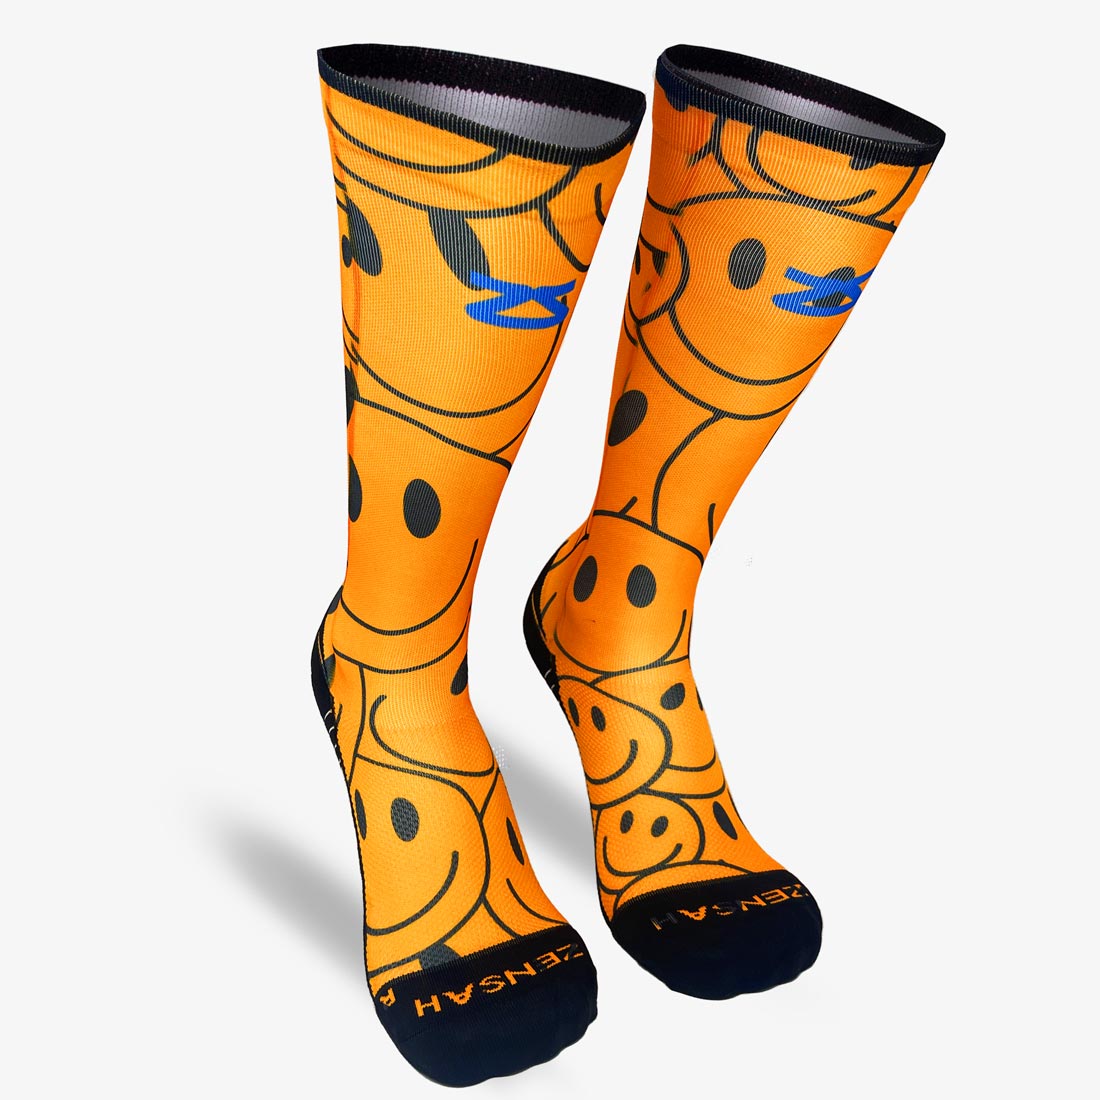 Overlapping Smileys Compression Socks (Knee-High)Socks - Zensah